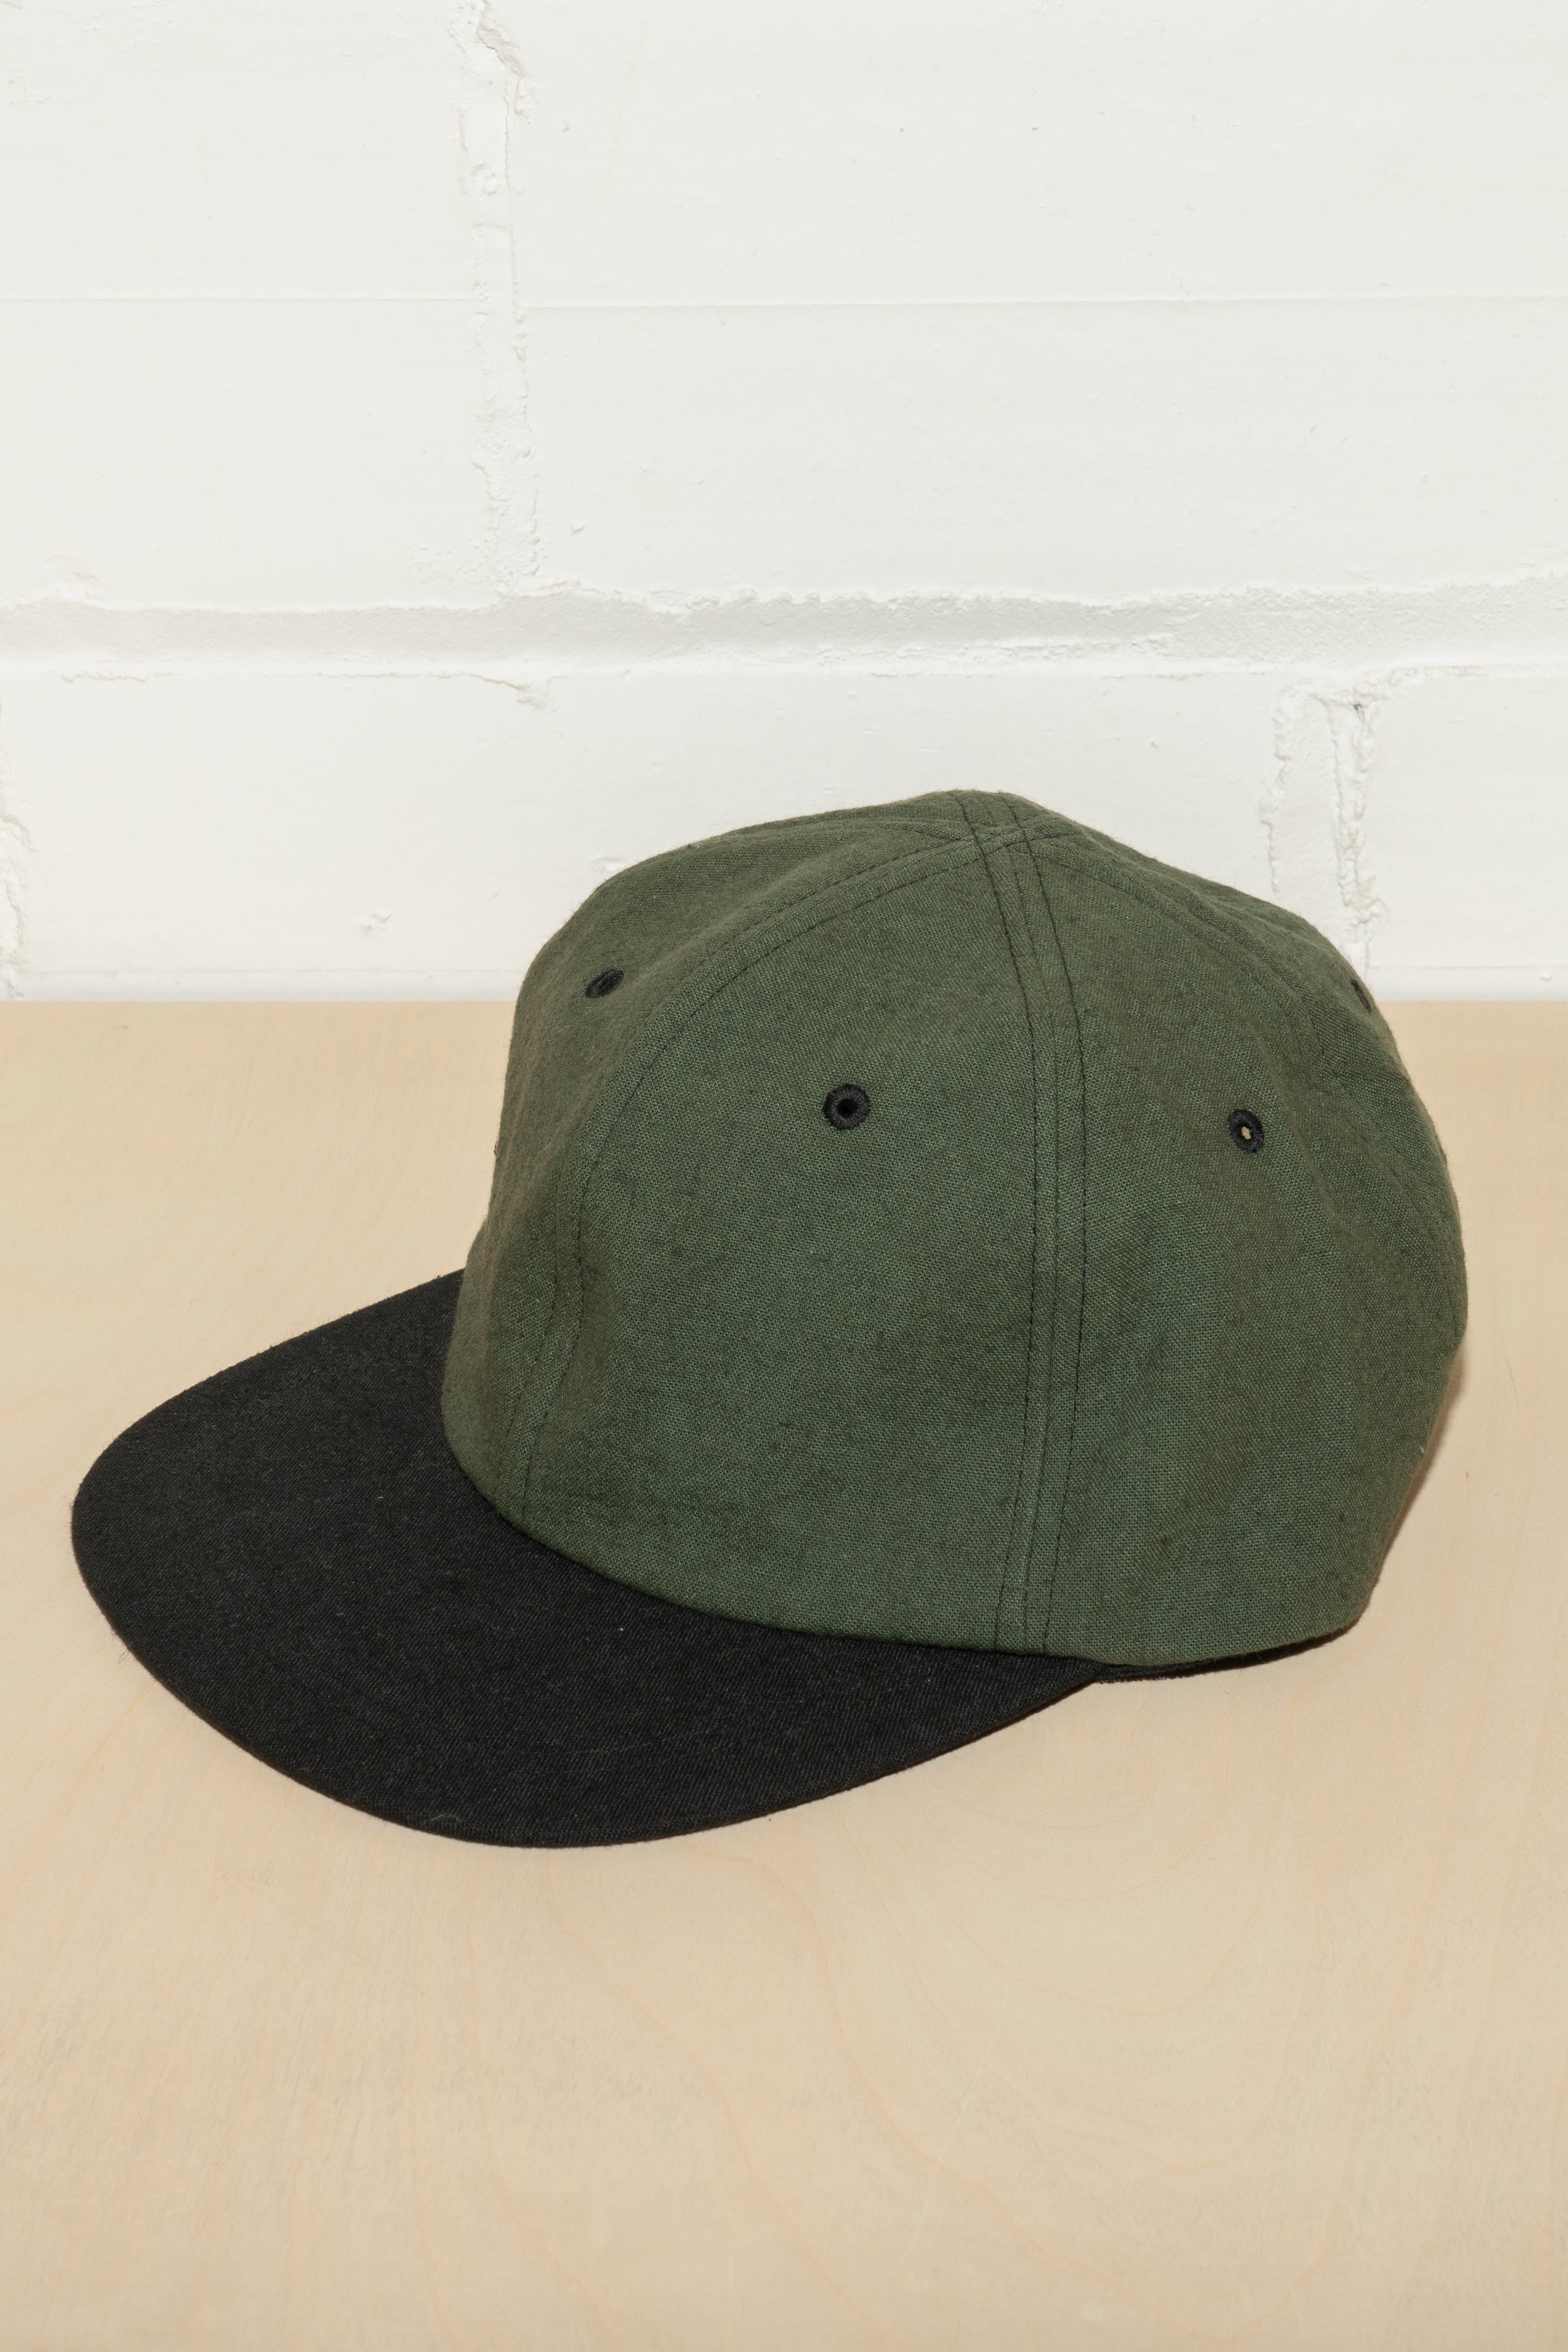 JHAKX - HEMP HAT IN GREEN AND BLACK